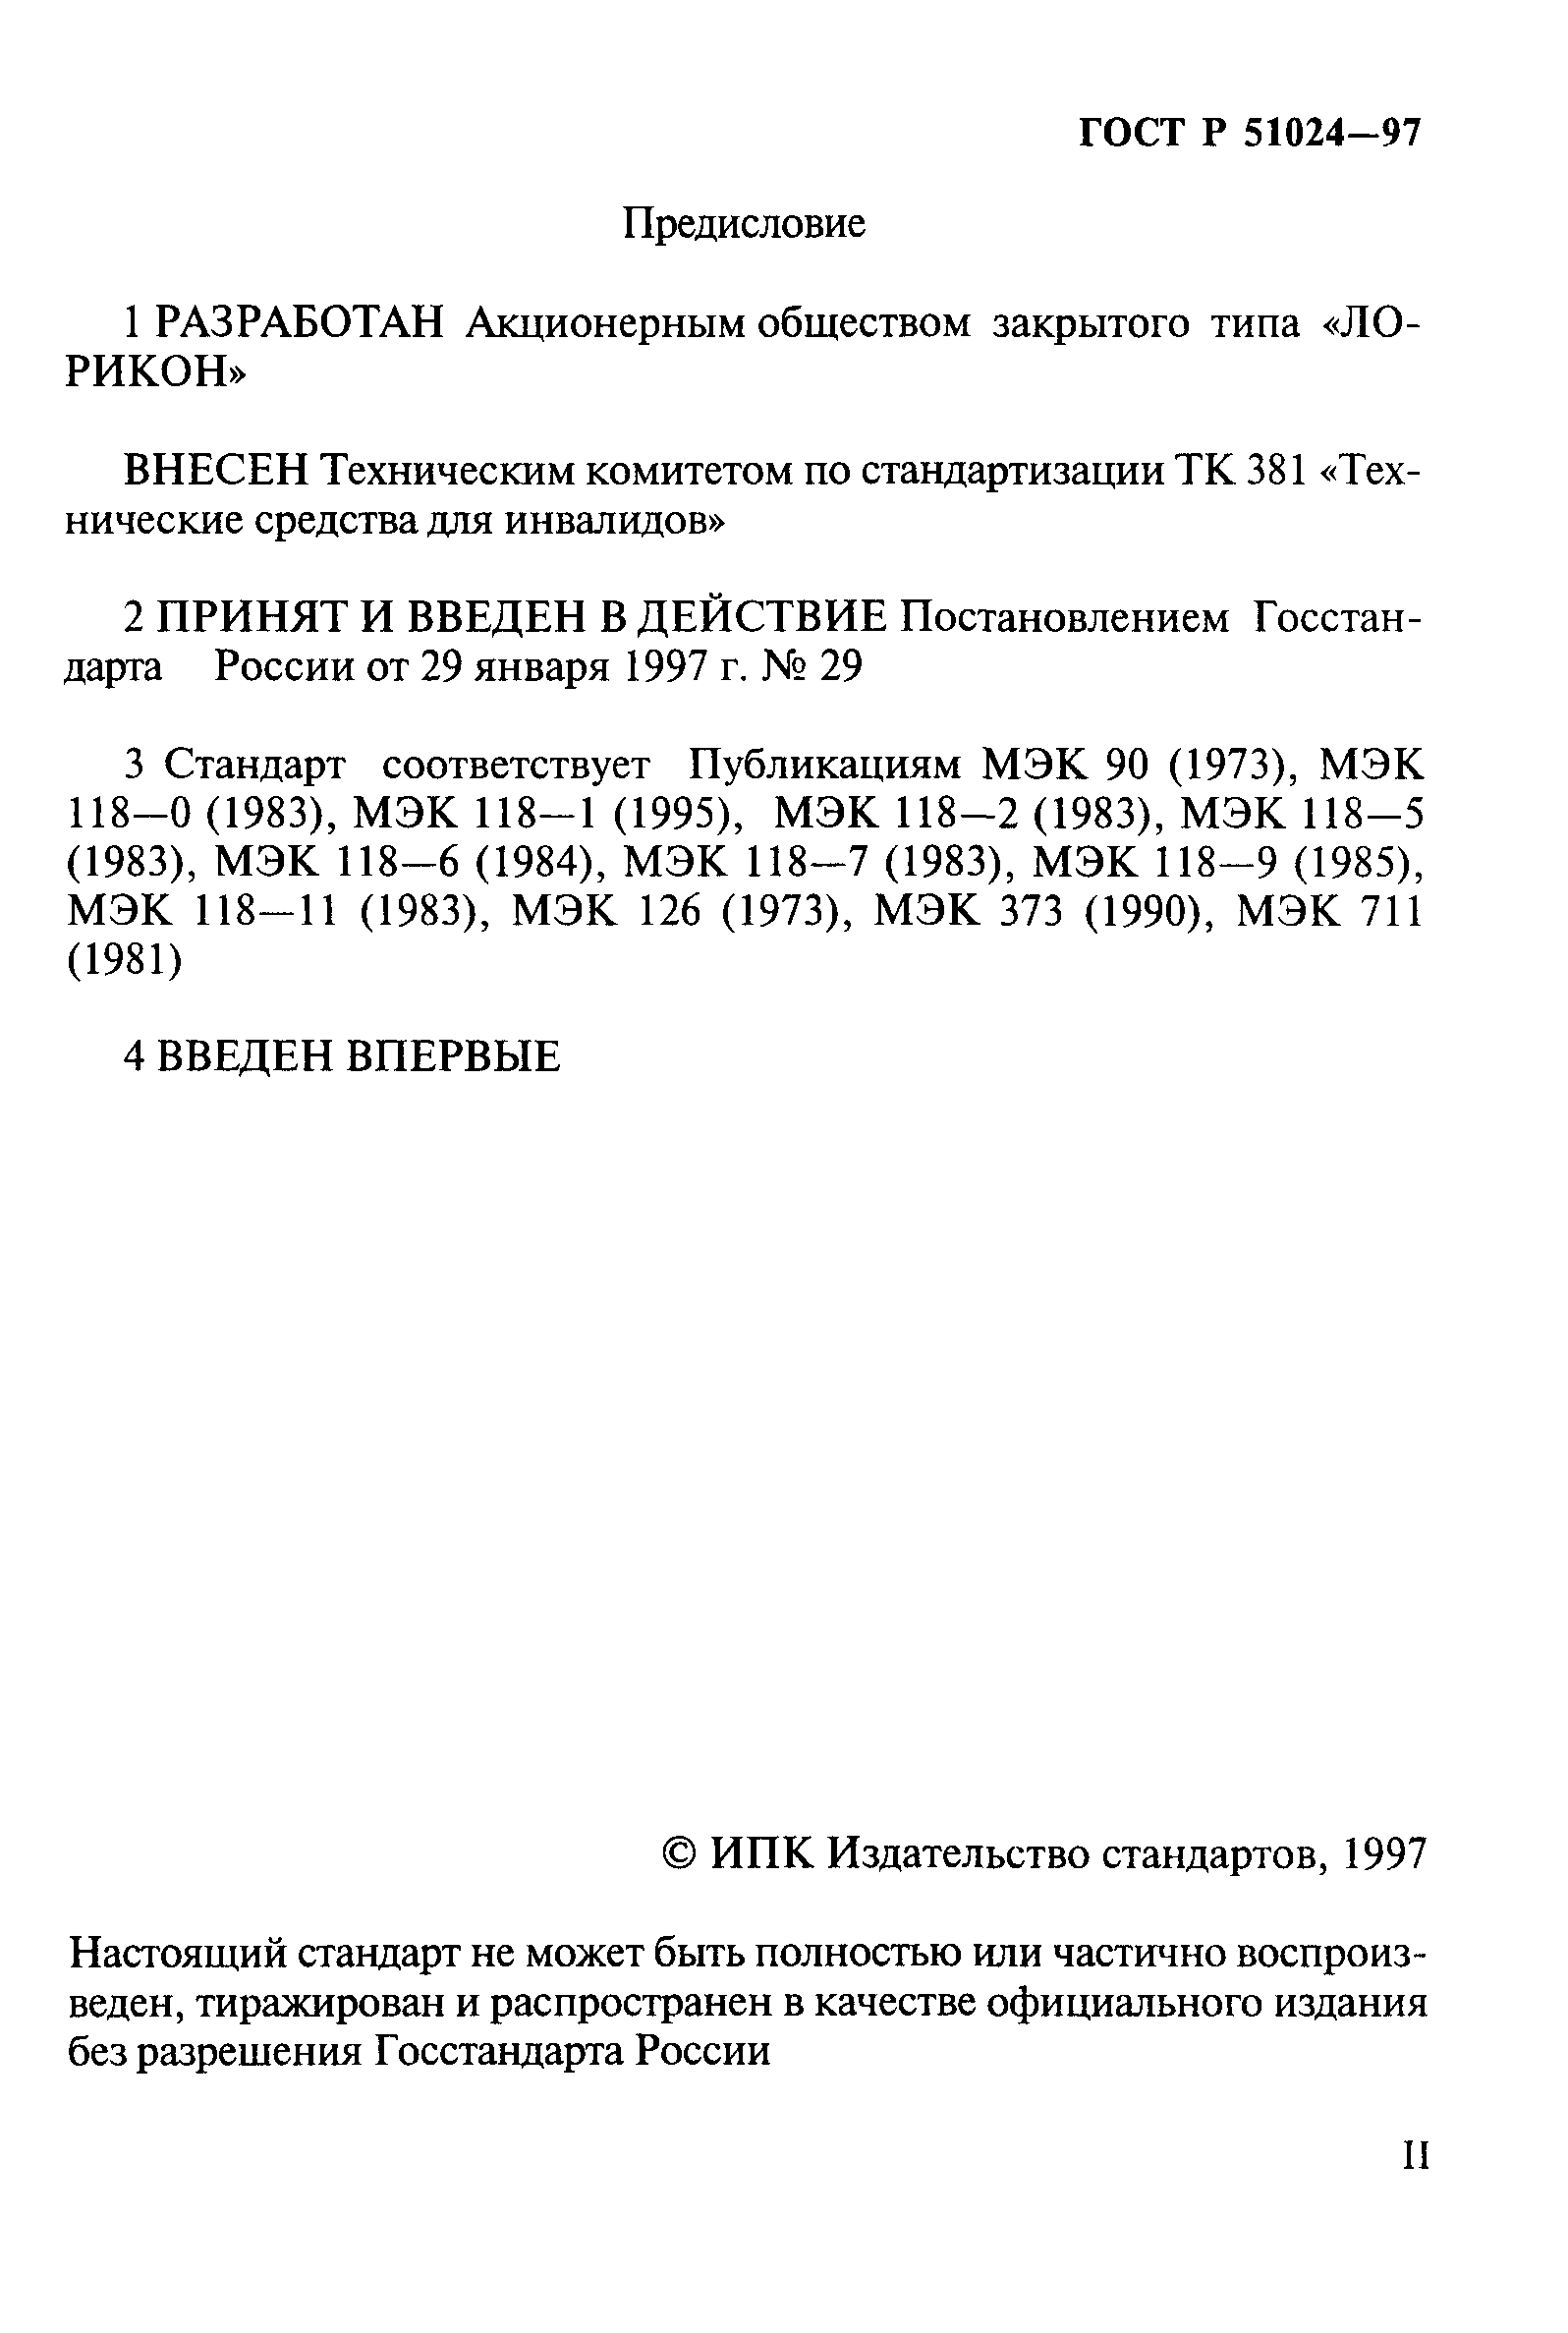 ГОСТ Р 51024-97